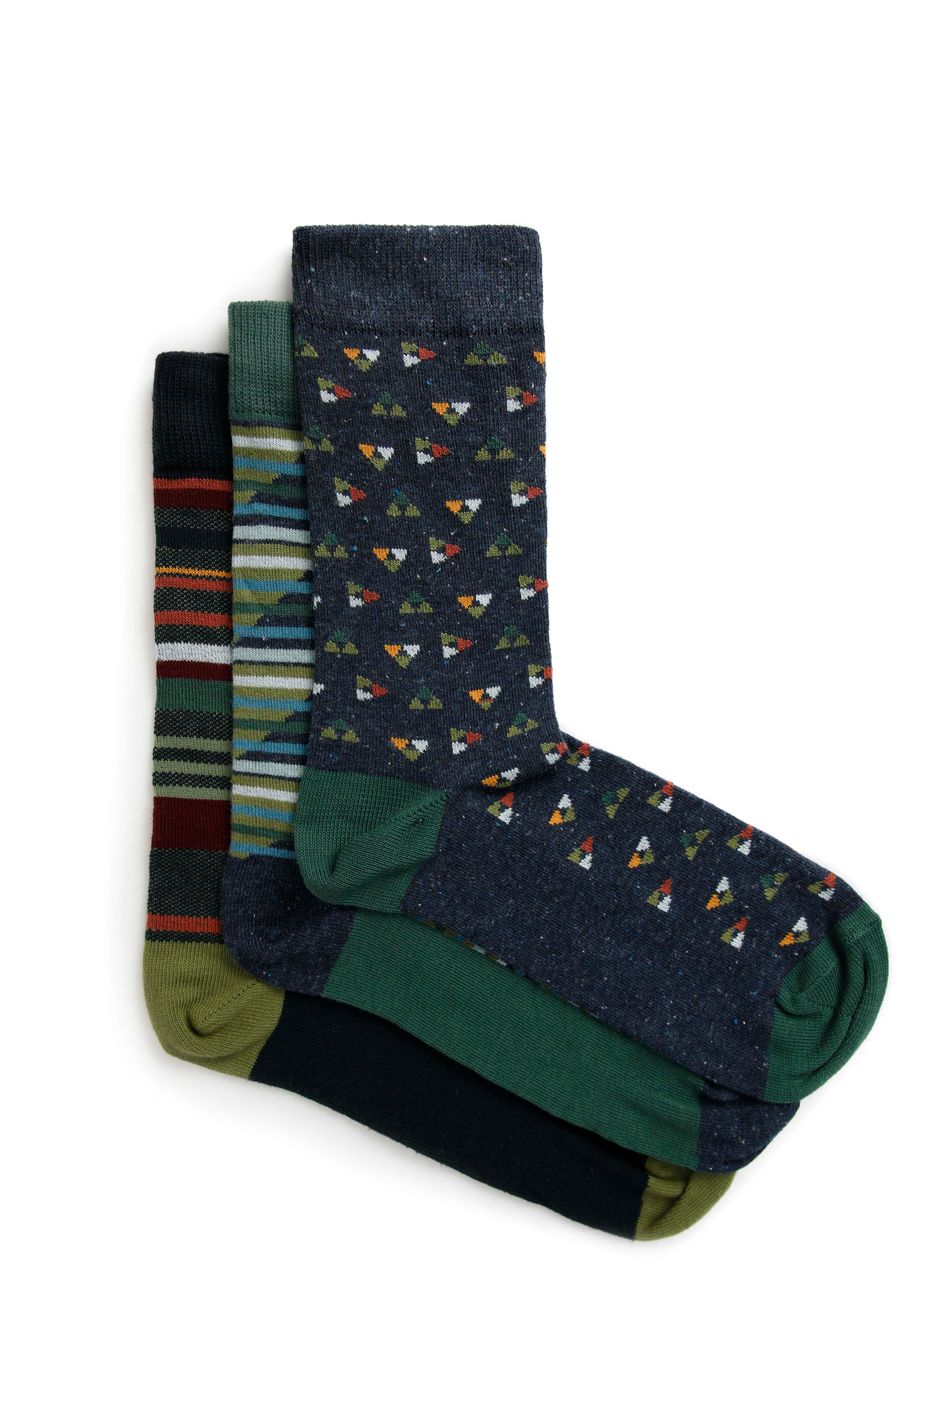 Wyatt Eco Stripe Socks Multi Pack Olive